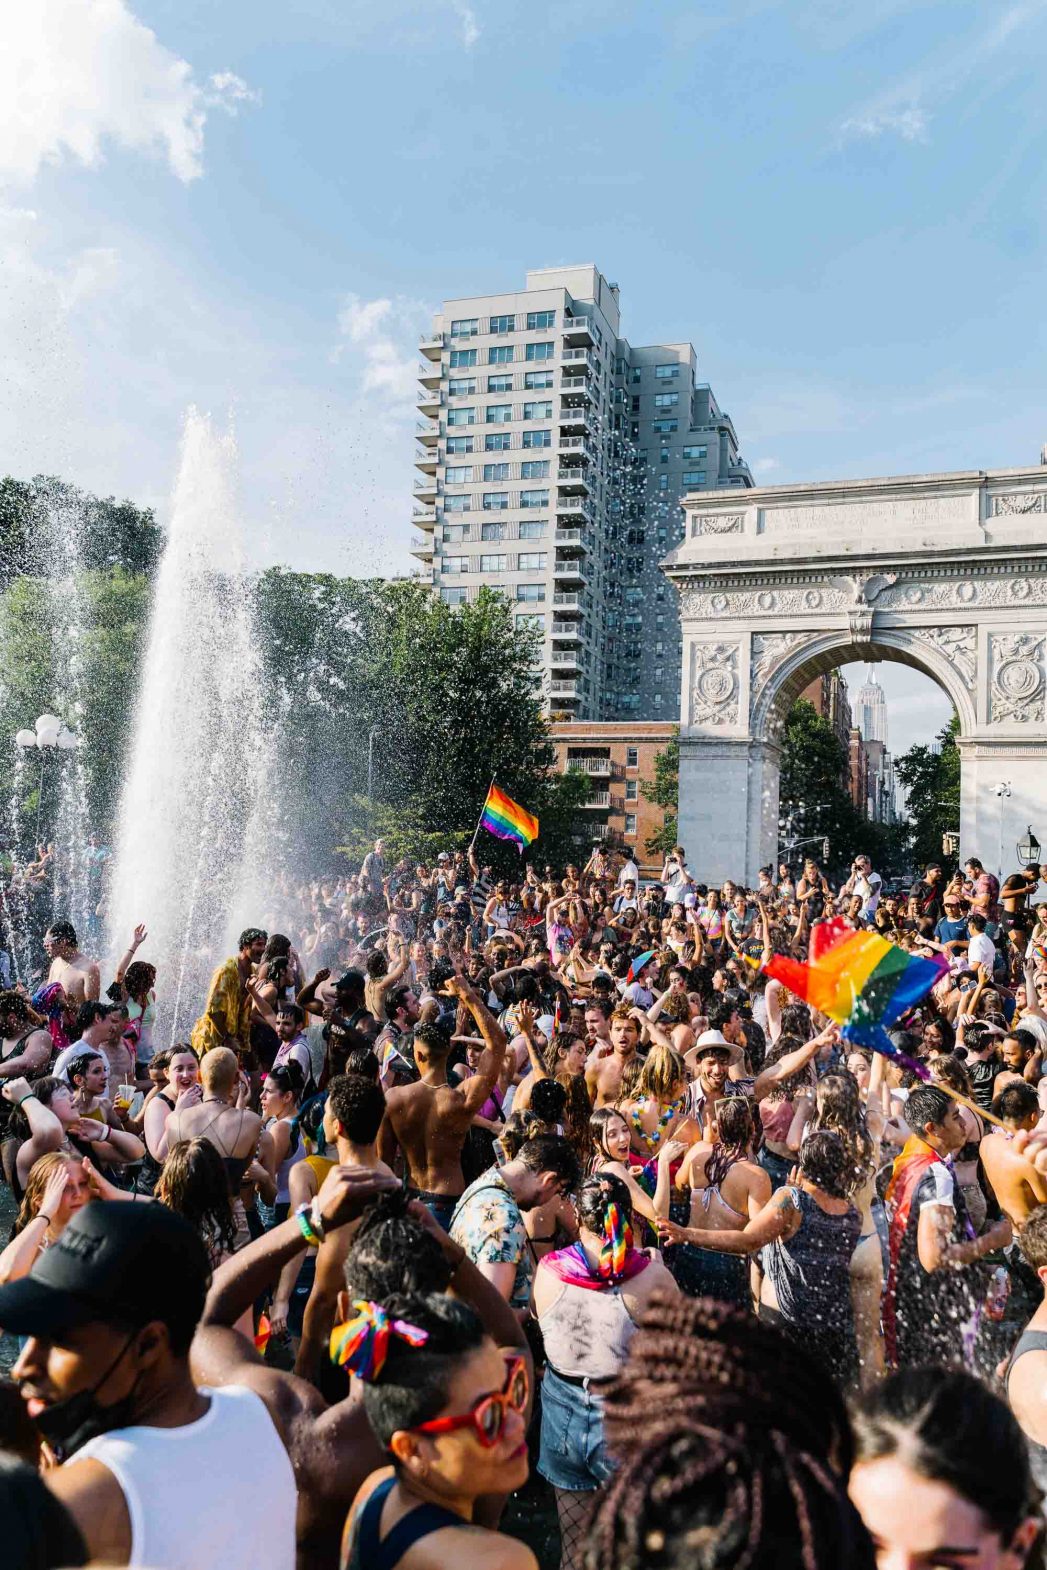 Revellers at the New York City Pride celebrate in Washington Square Park.